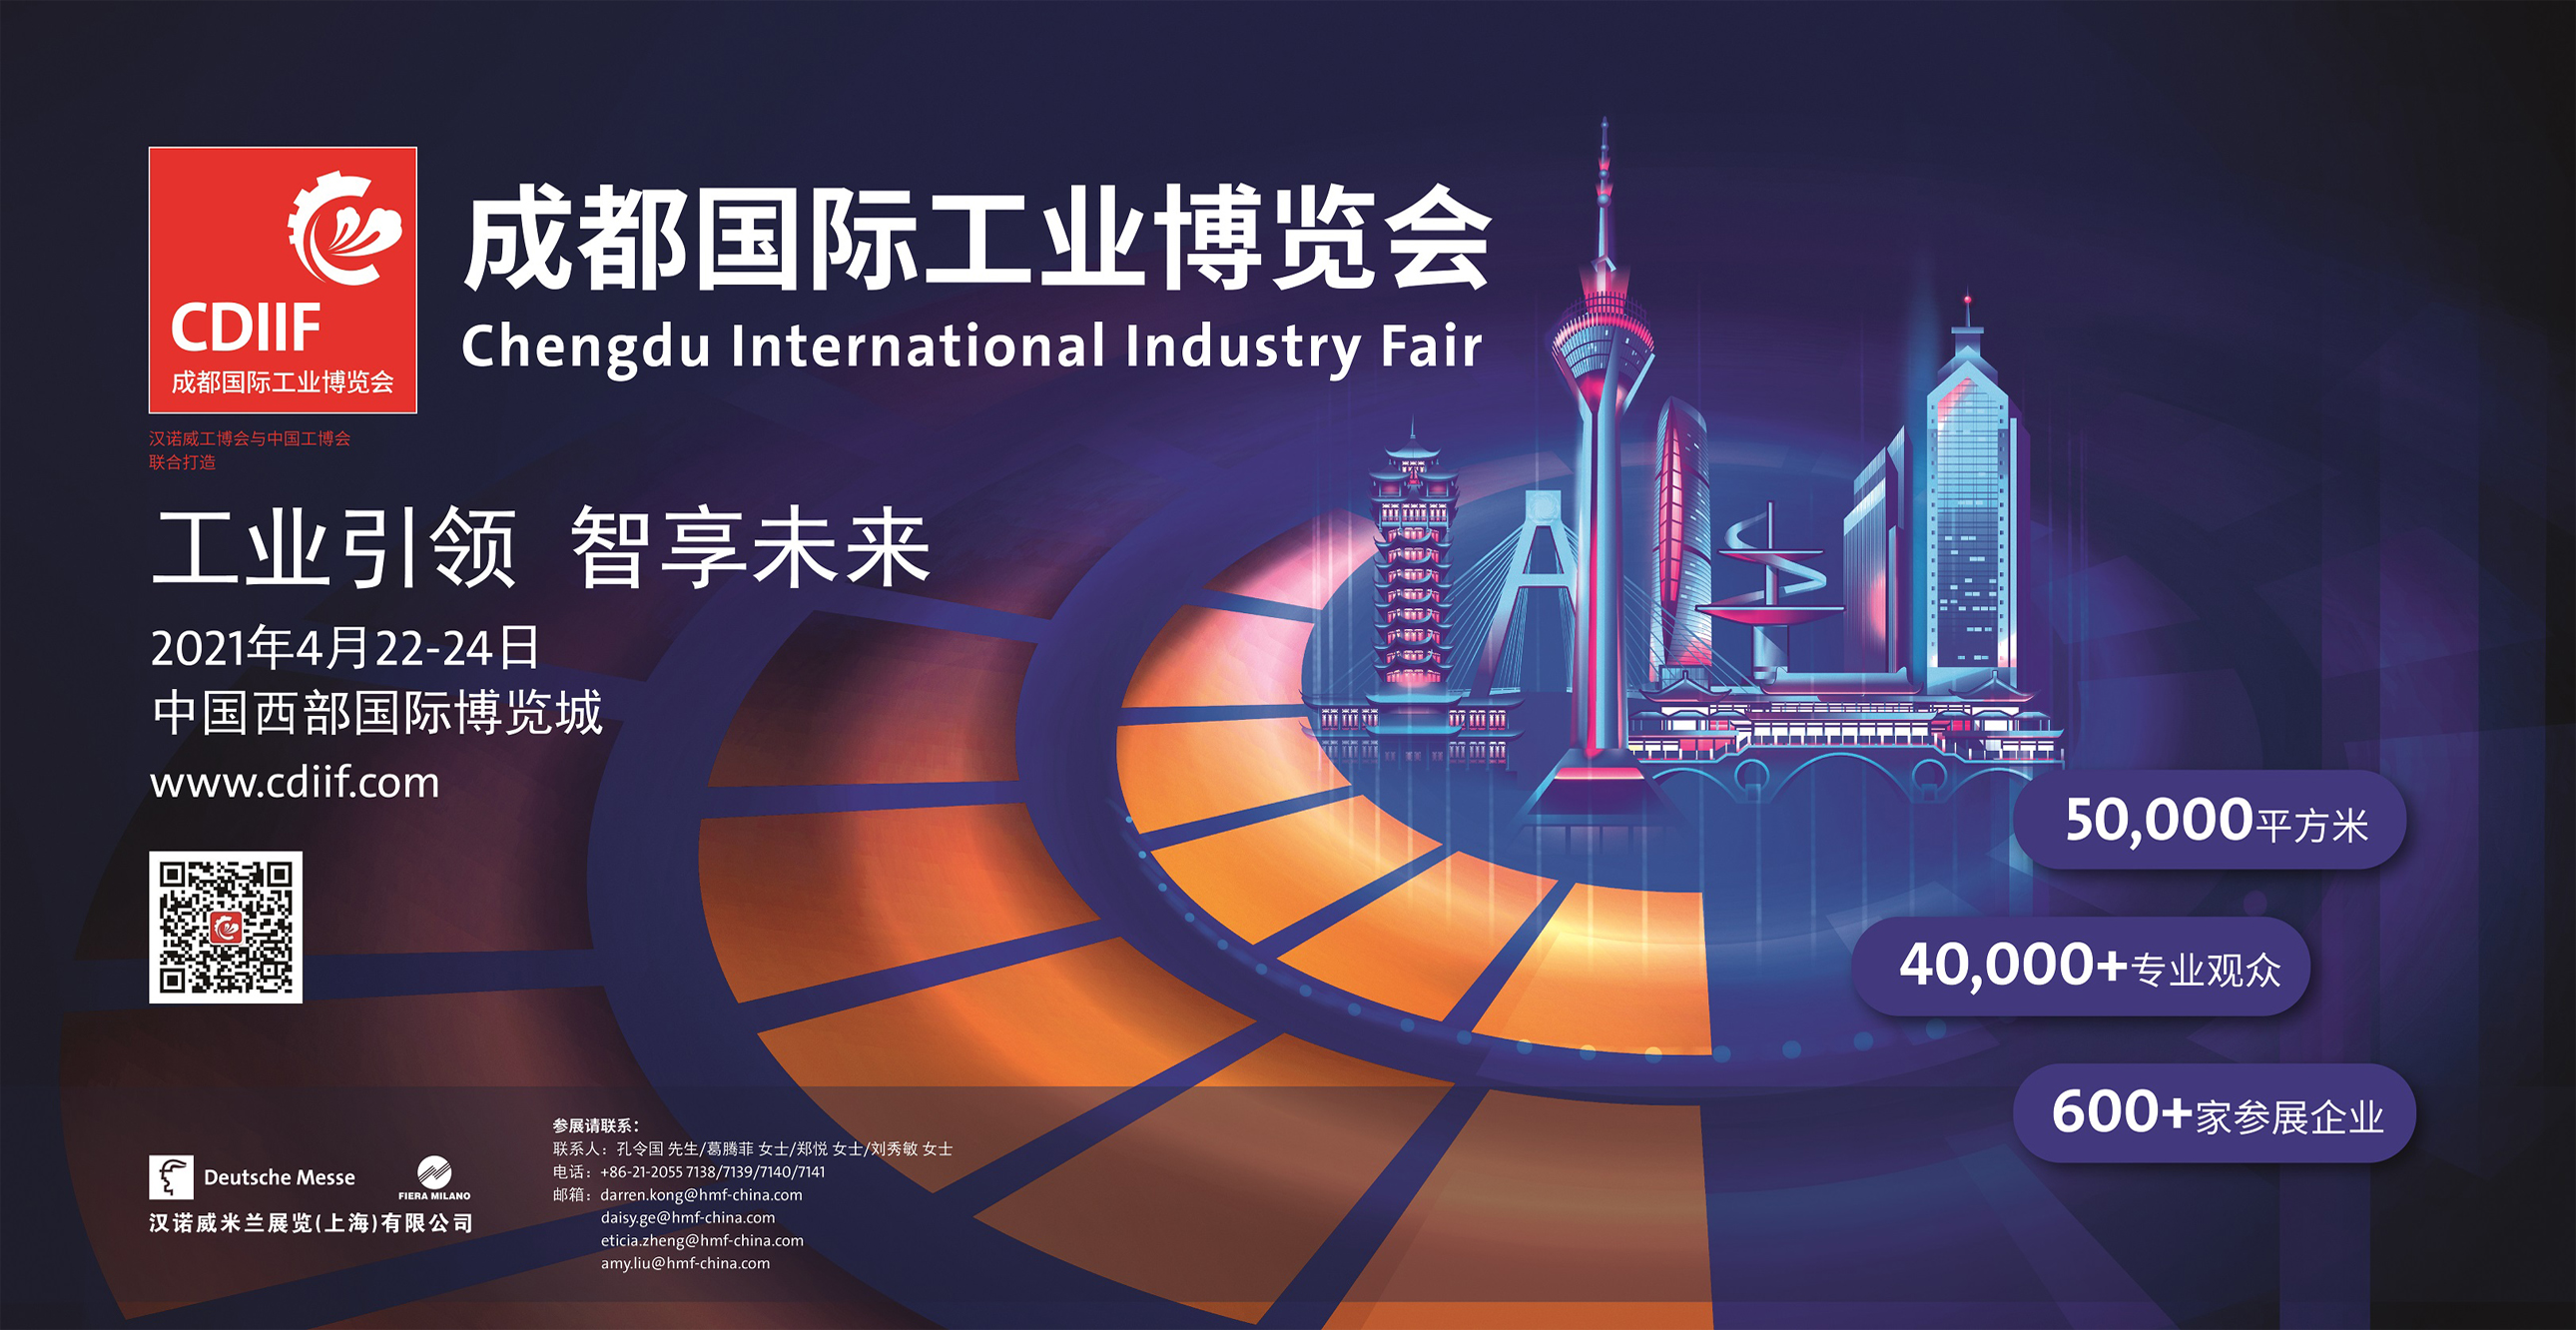 ""Chengdu International Industry Fair (CDIIF)